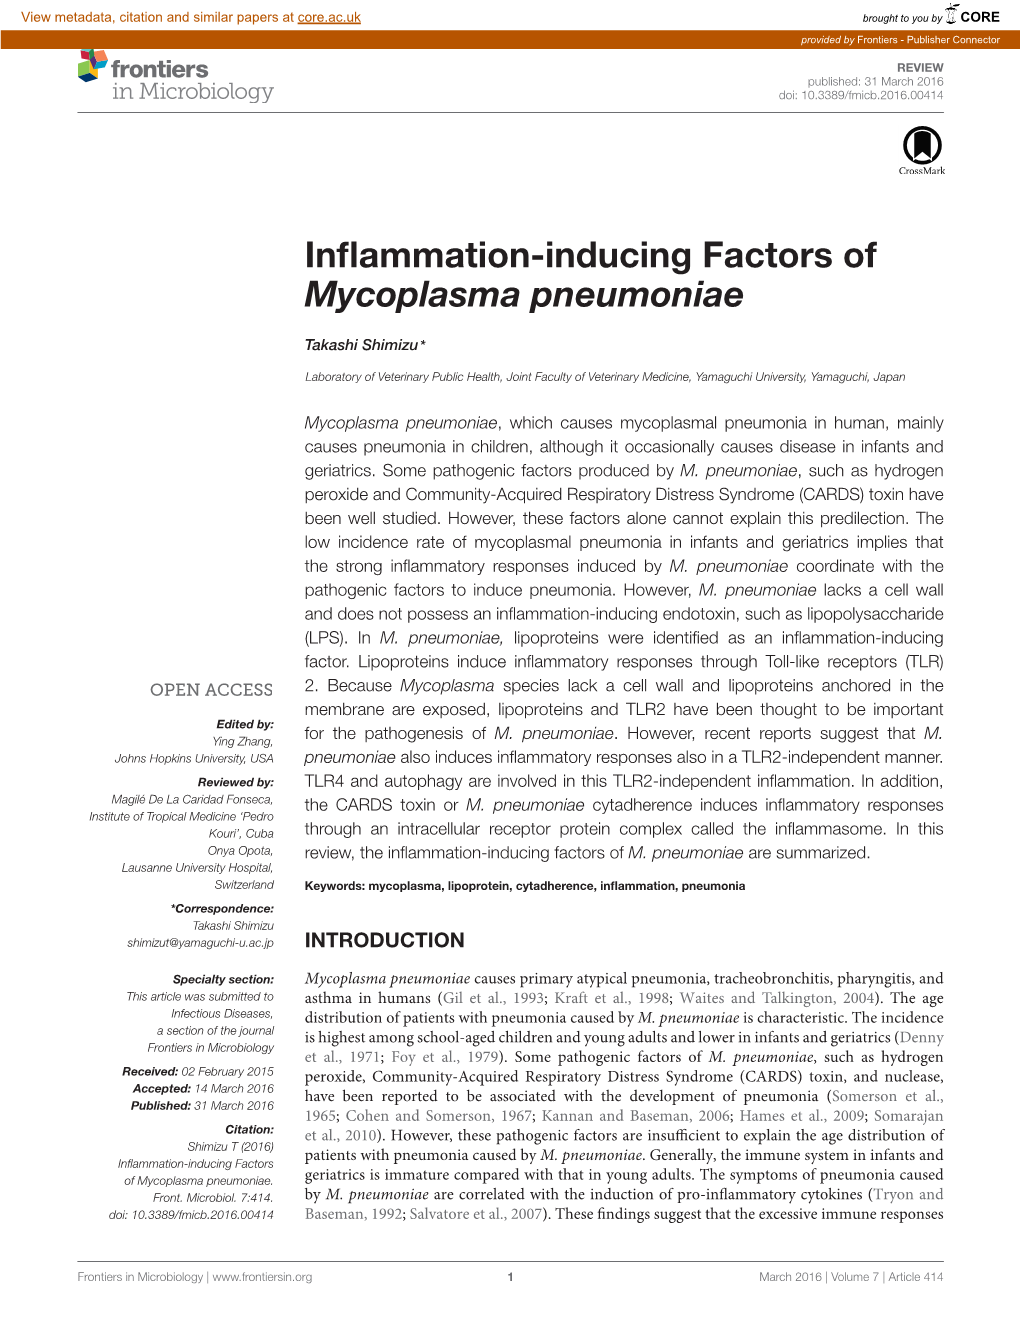 Inflammation-Inducing Factors of Mycoplasma Pneumoniae